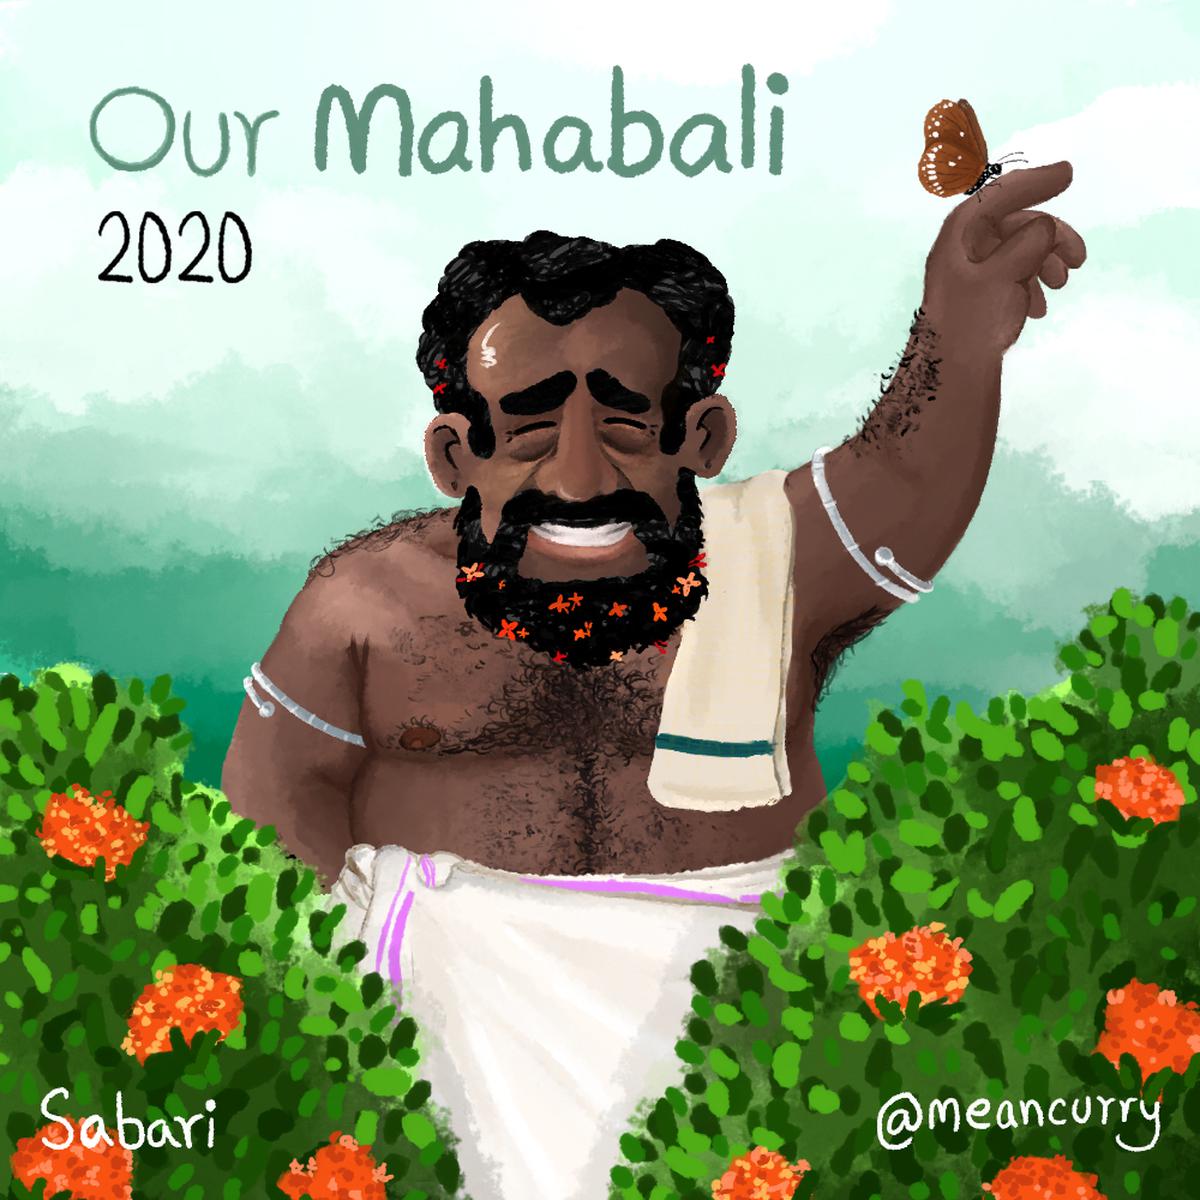 Image of Mahabali, visualised by designer Sabari Venu, in 2020